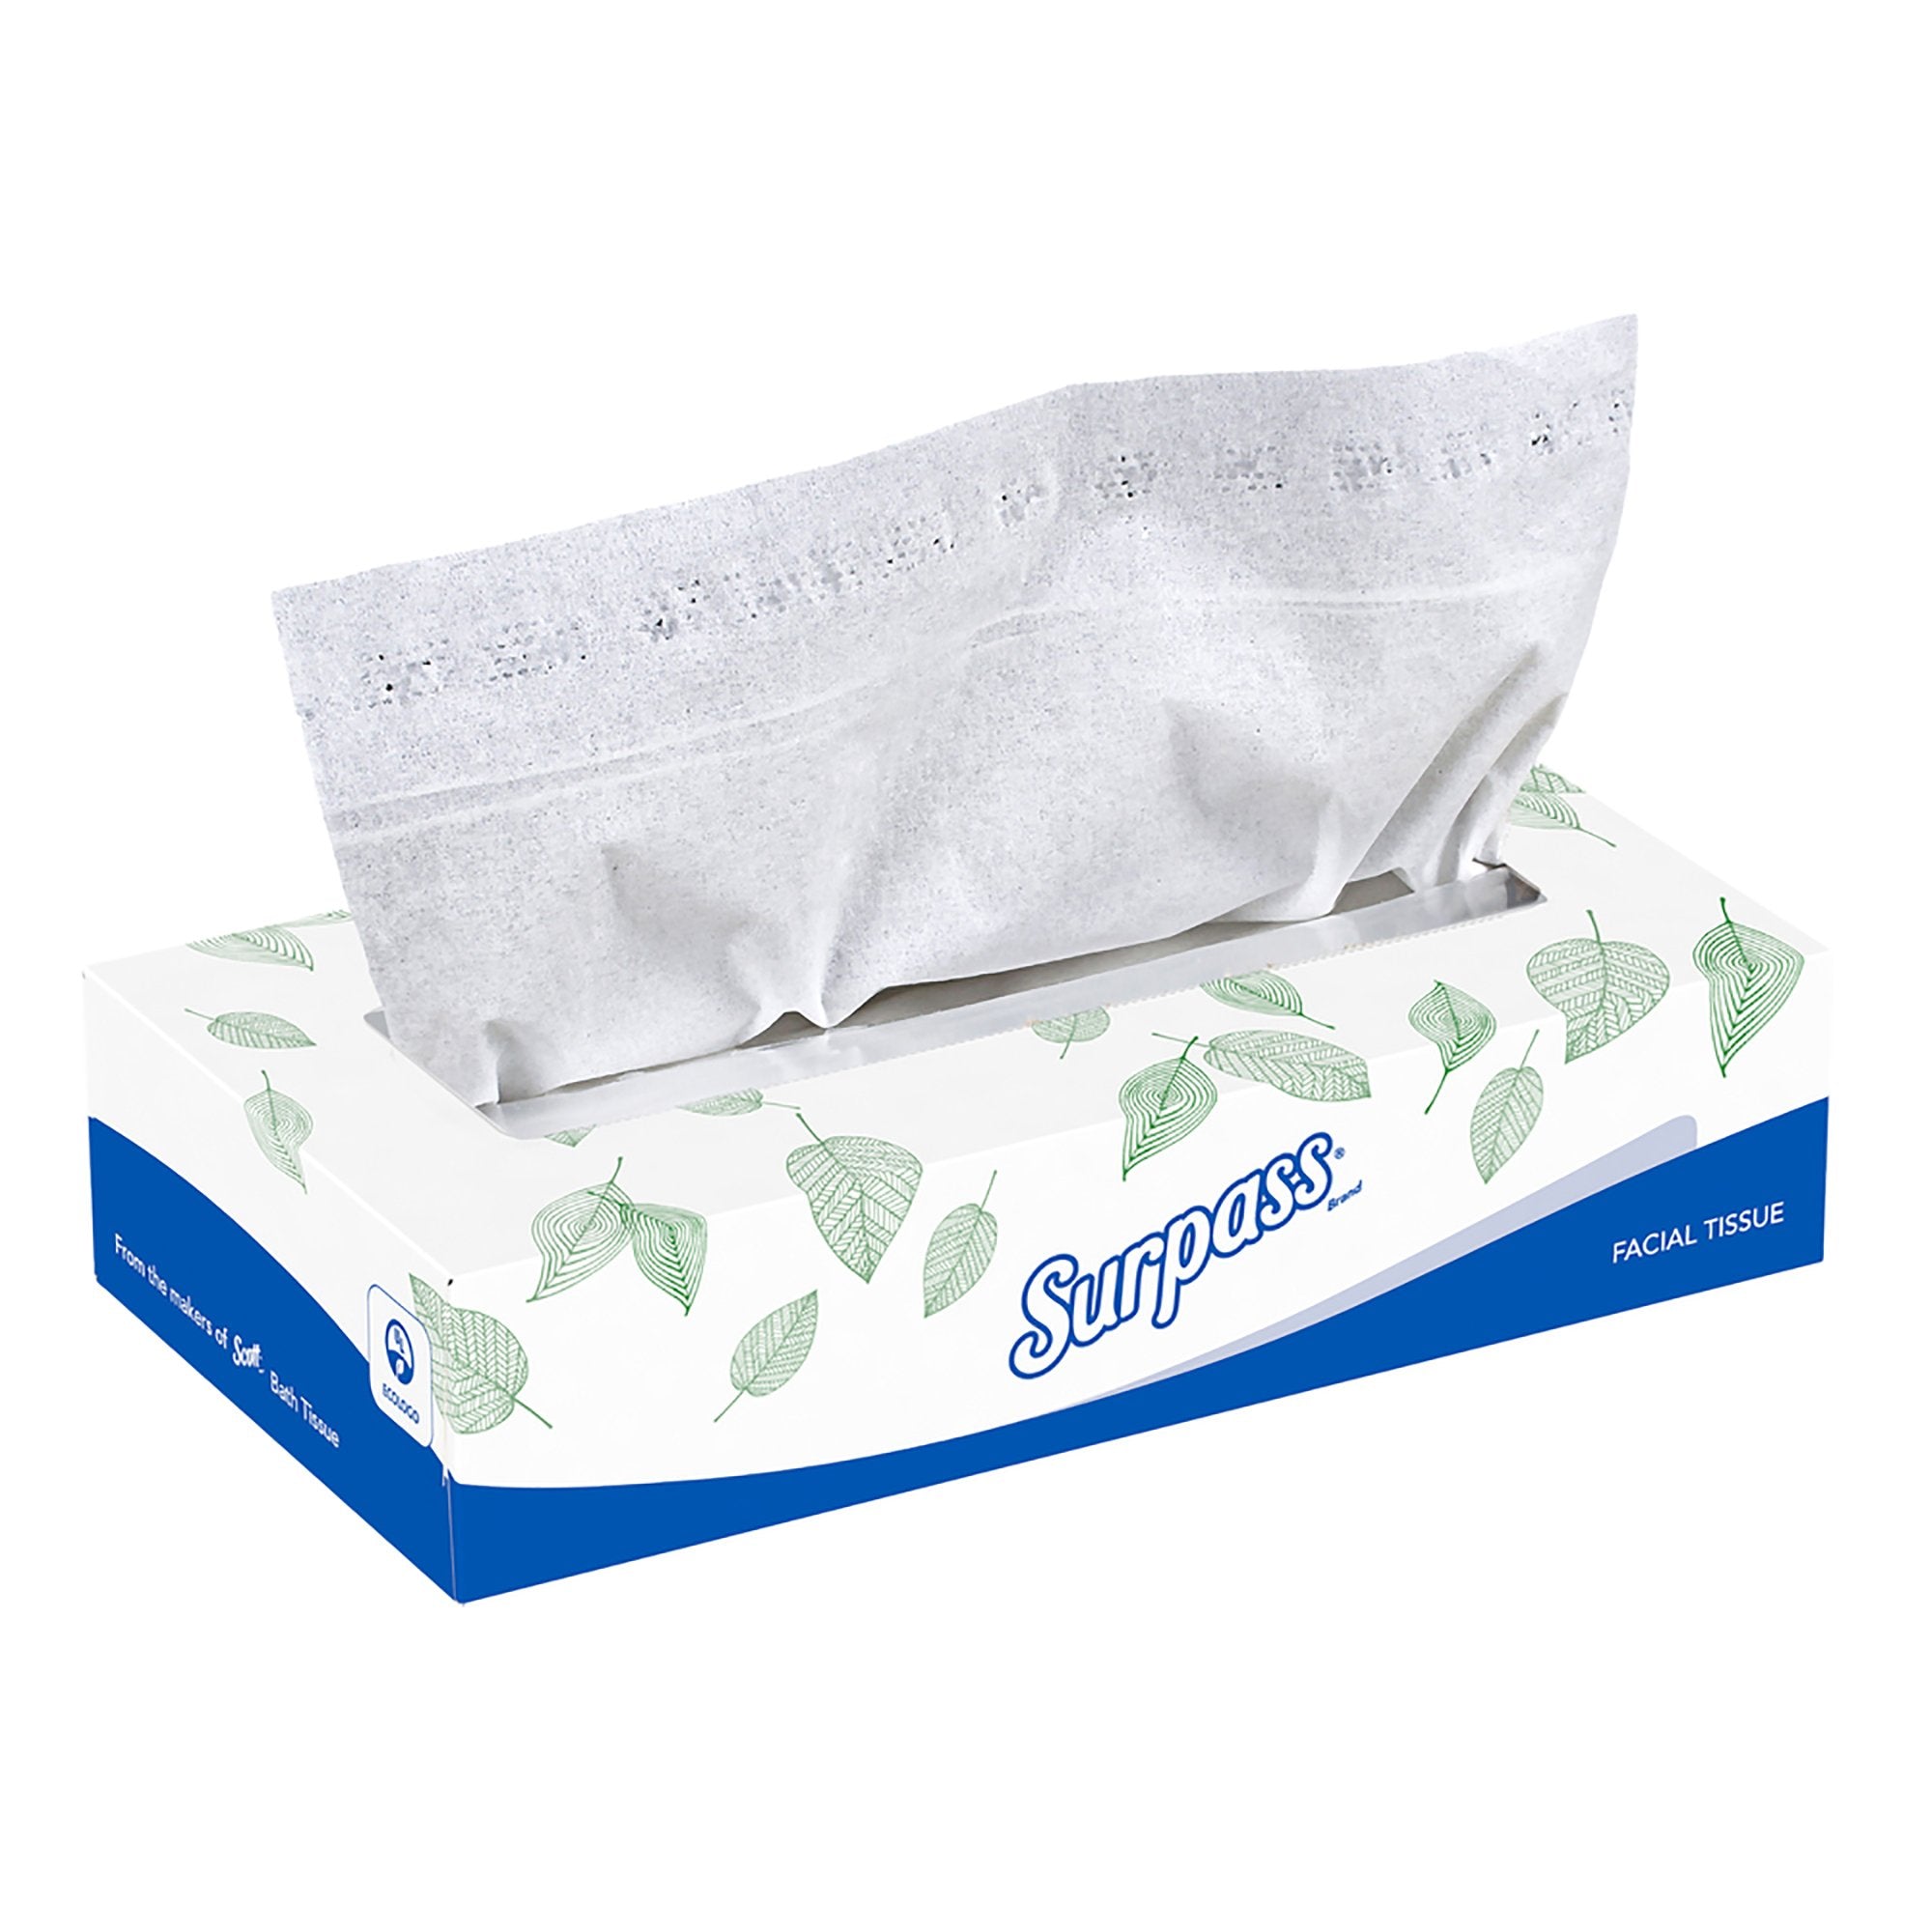 Surpass Facial Tissue, 100 per Box -Box of 100